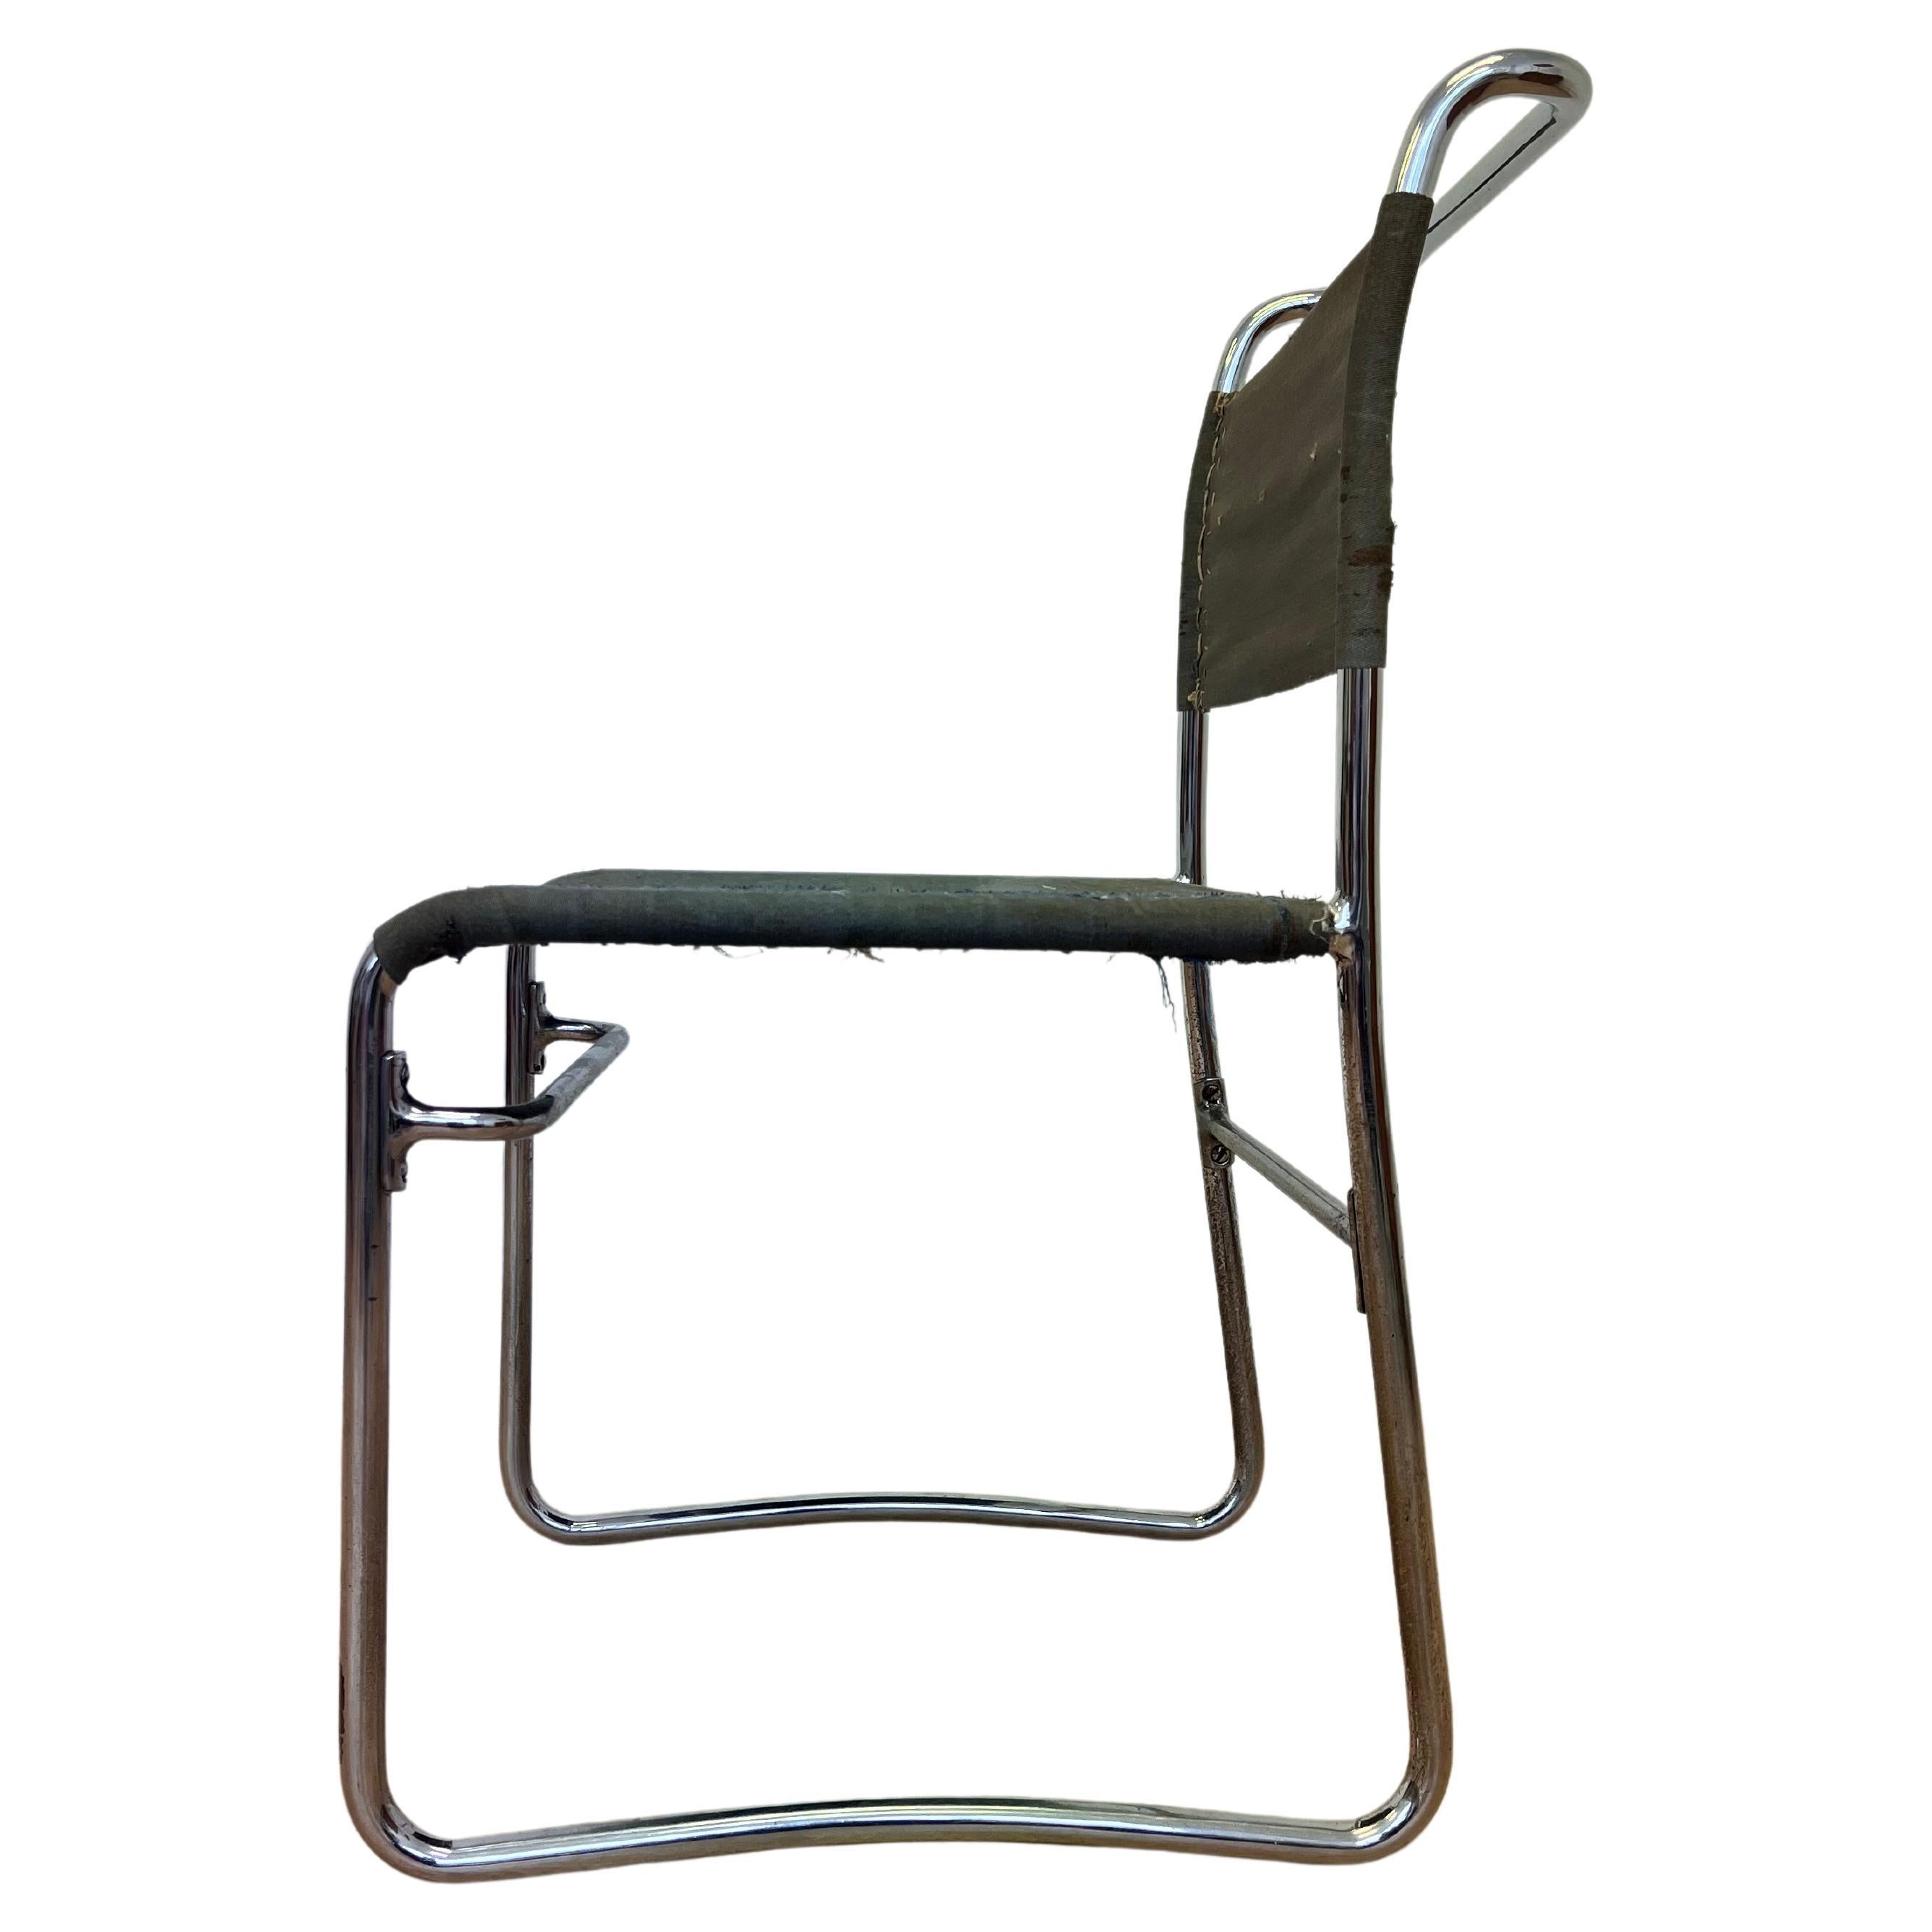 Tubular Steel Chrome Bauhaus Chair by Hynek Gottwald - 1930 (Eisengarn) For Sale